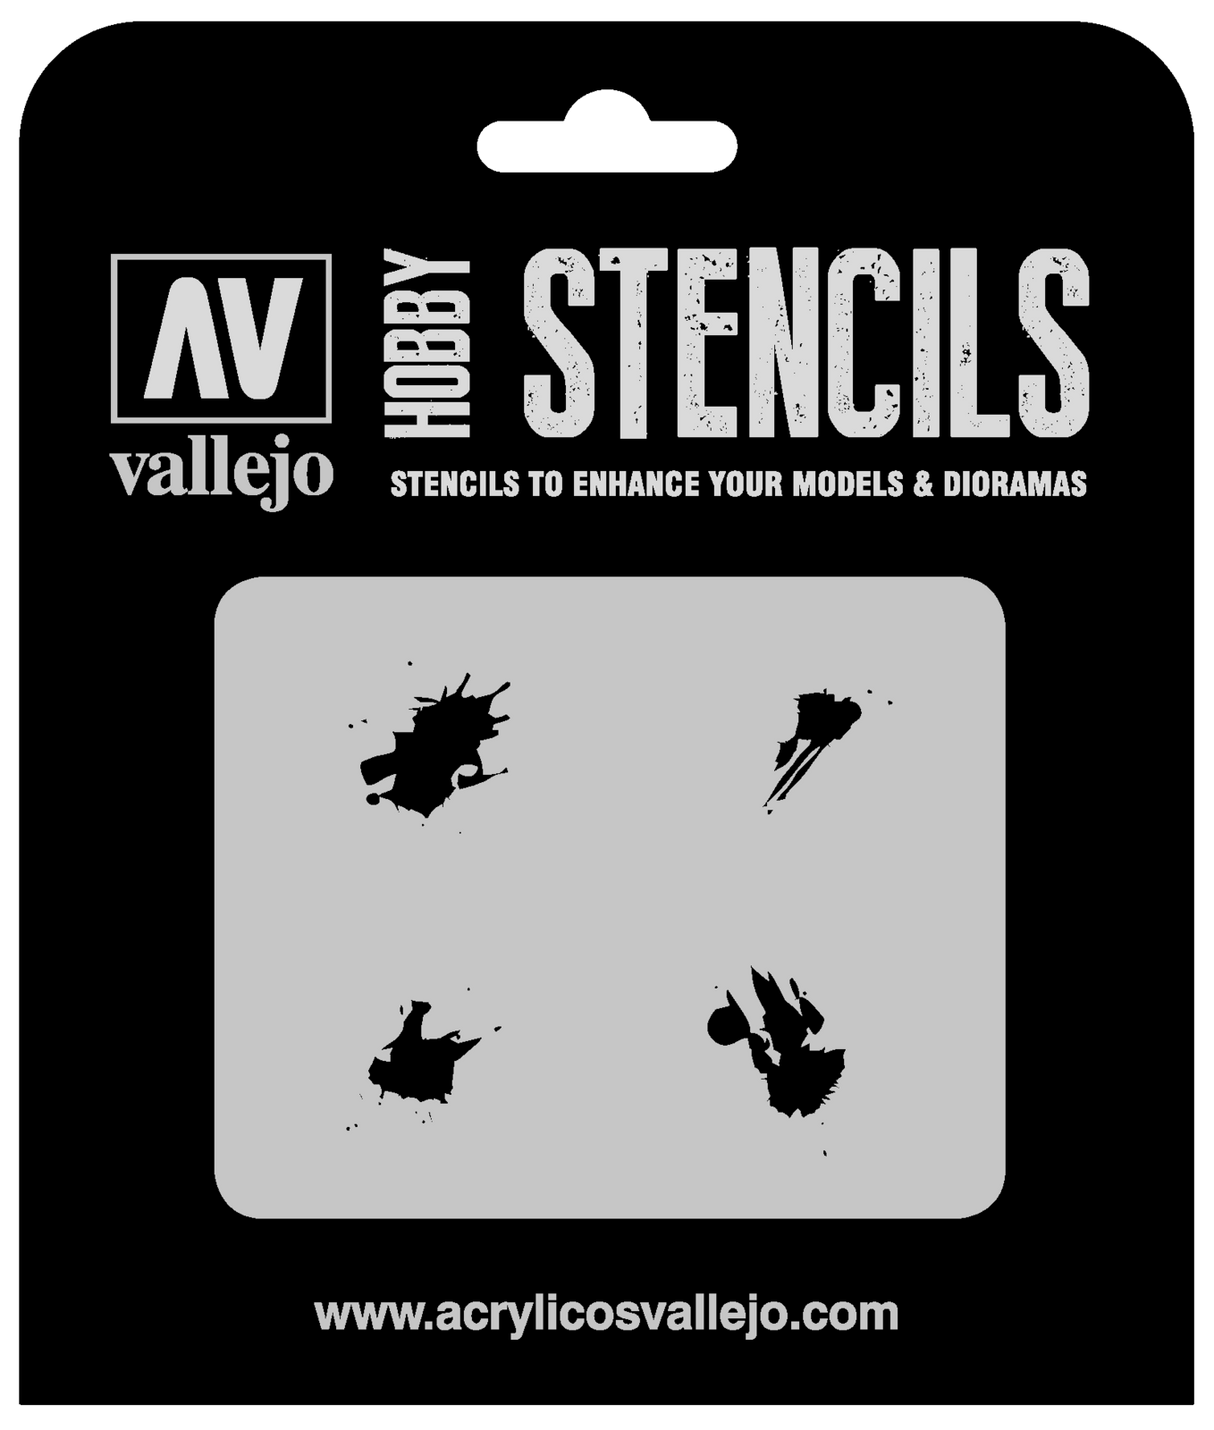 Vallejo ST-TX004 1/35 Petrol Spills Stencil Vallejo PAINT, BRUSHES & SUPPLIES